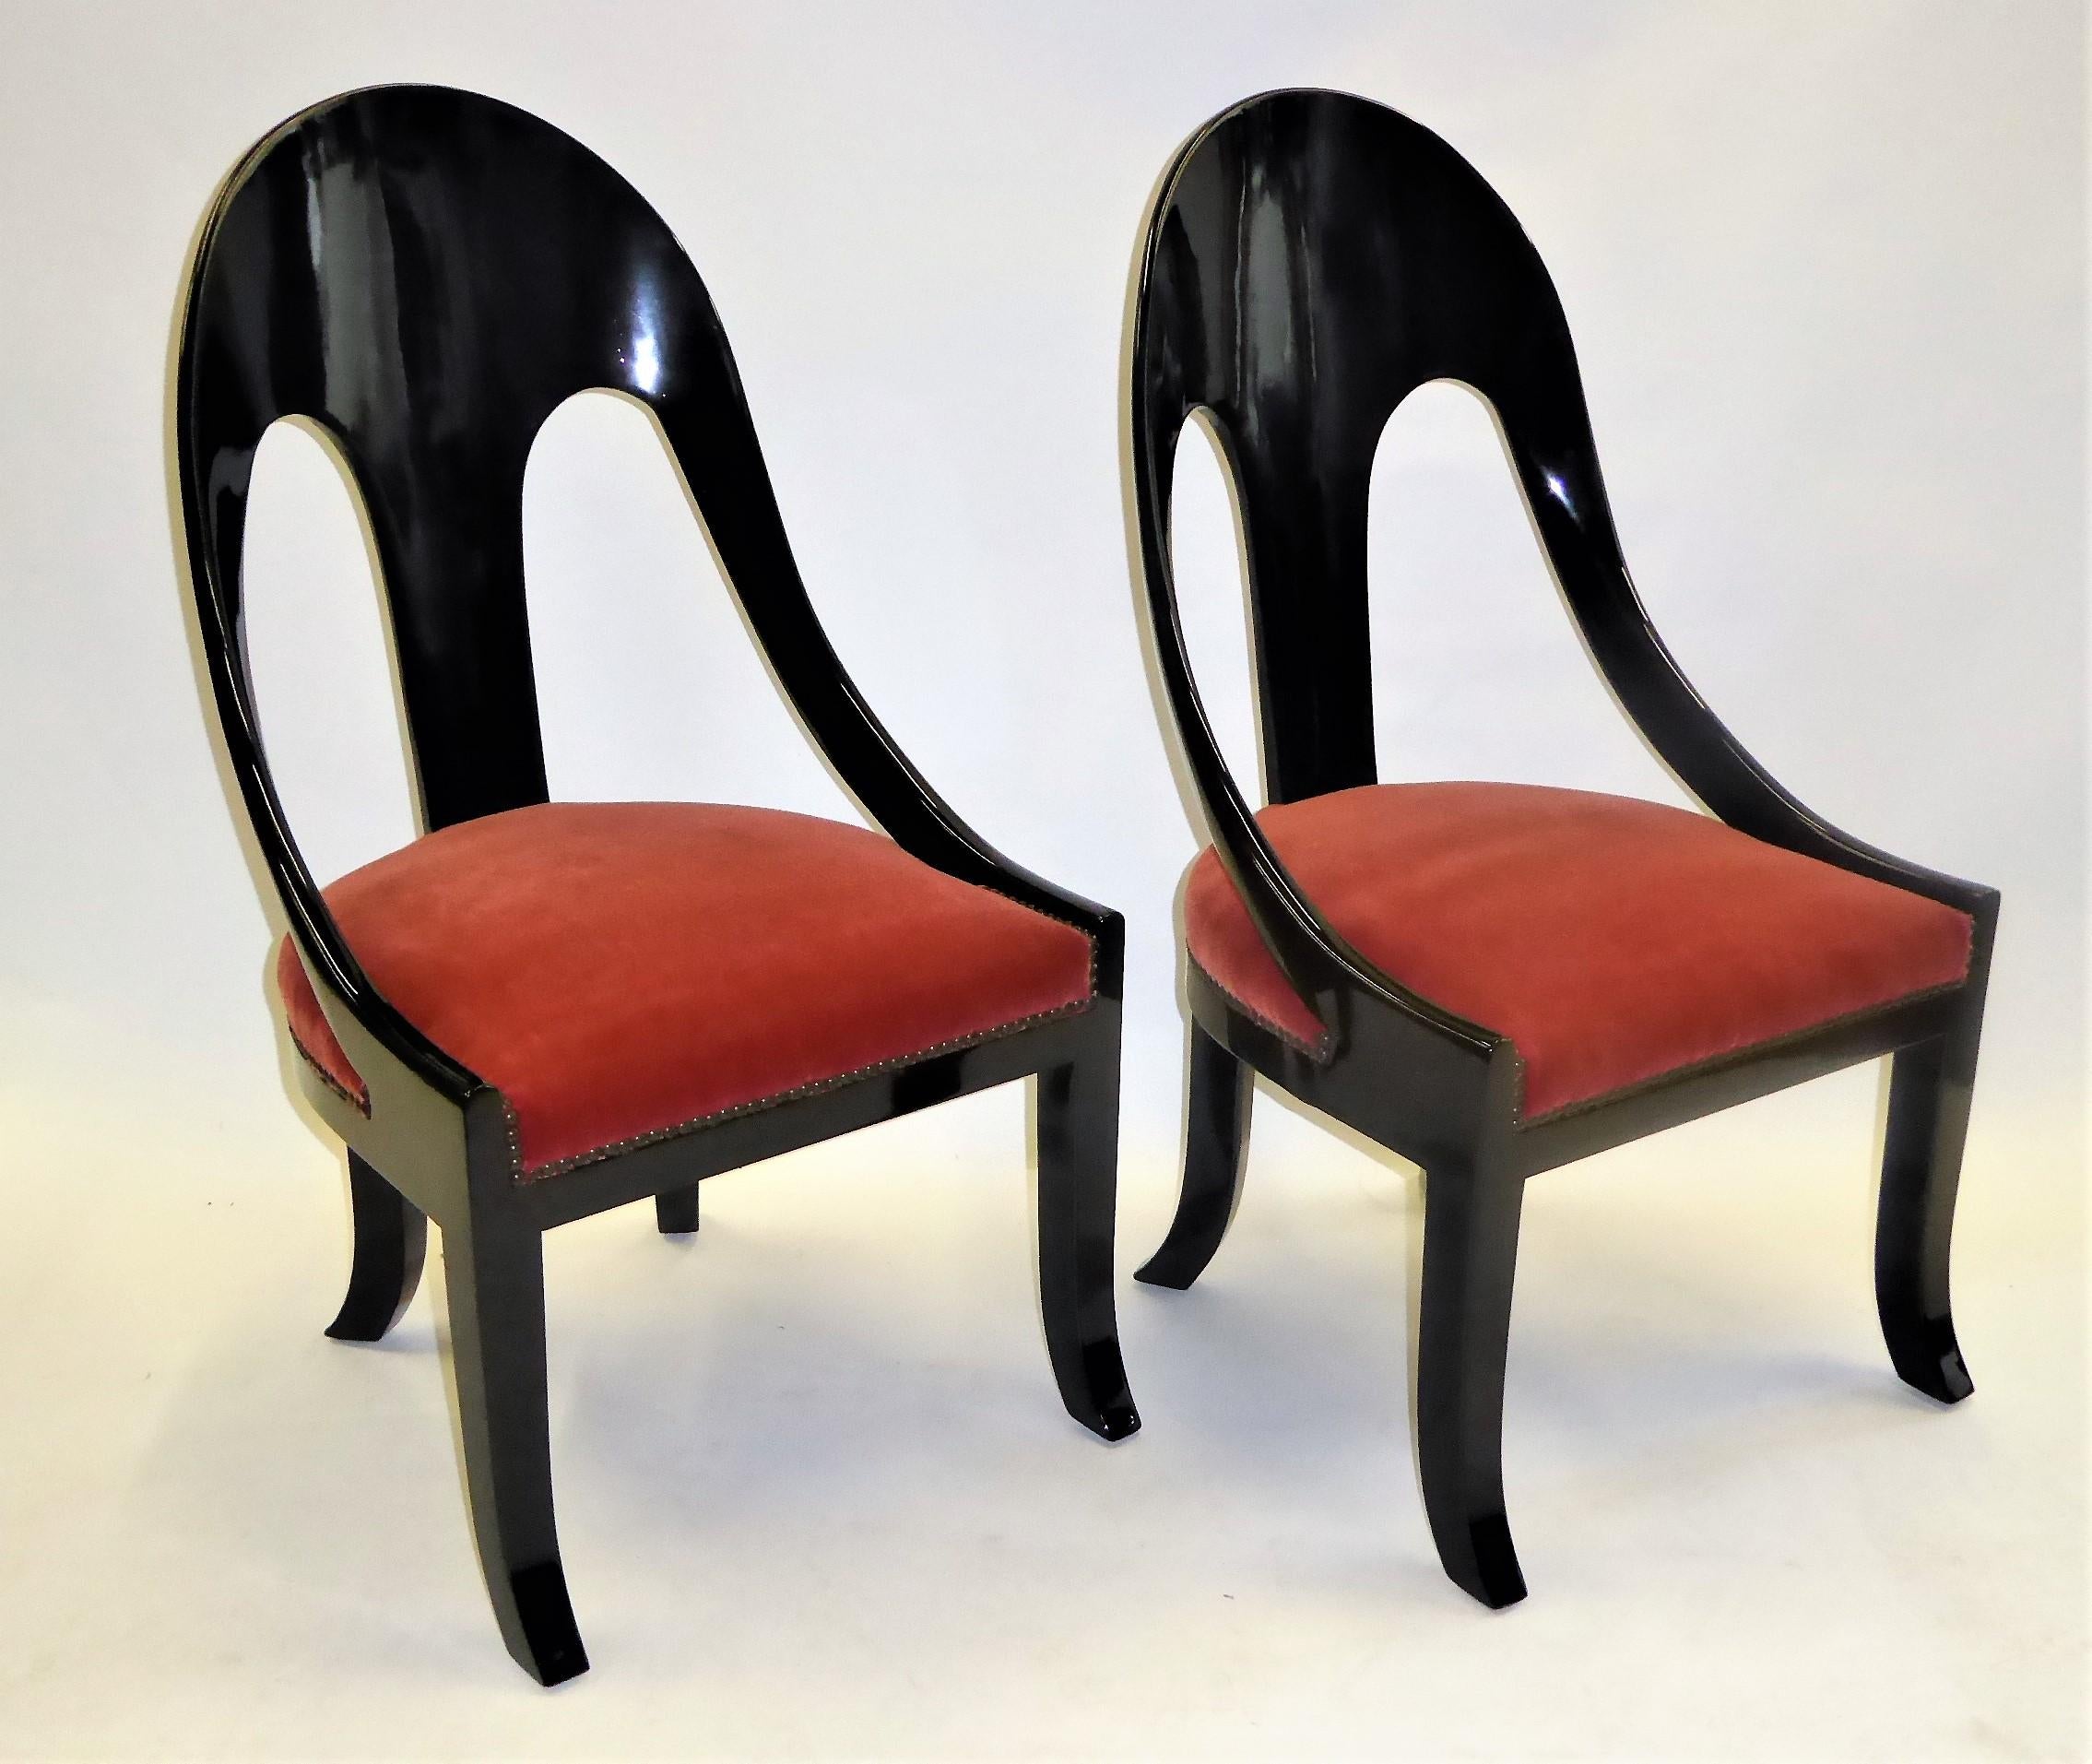 American 1930s Art Deco Black Lacquered Spoonback Chairs in Mohair Velvet